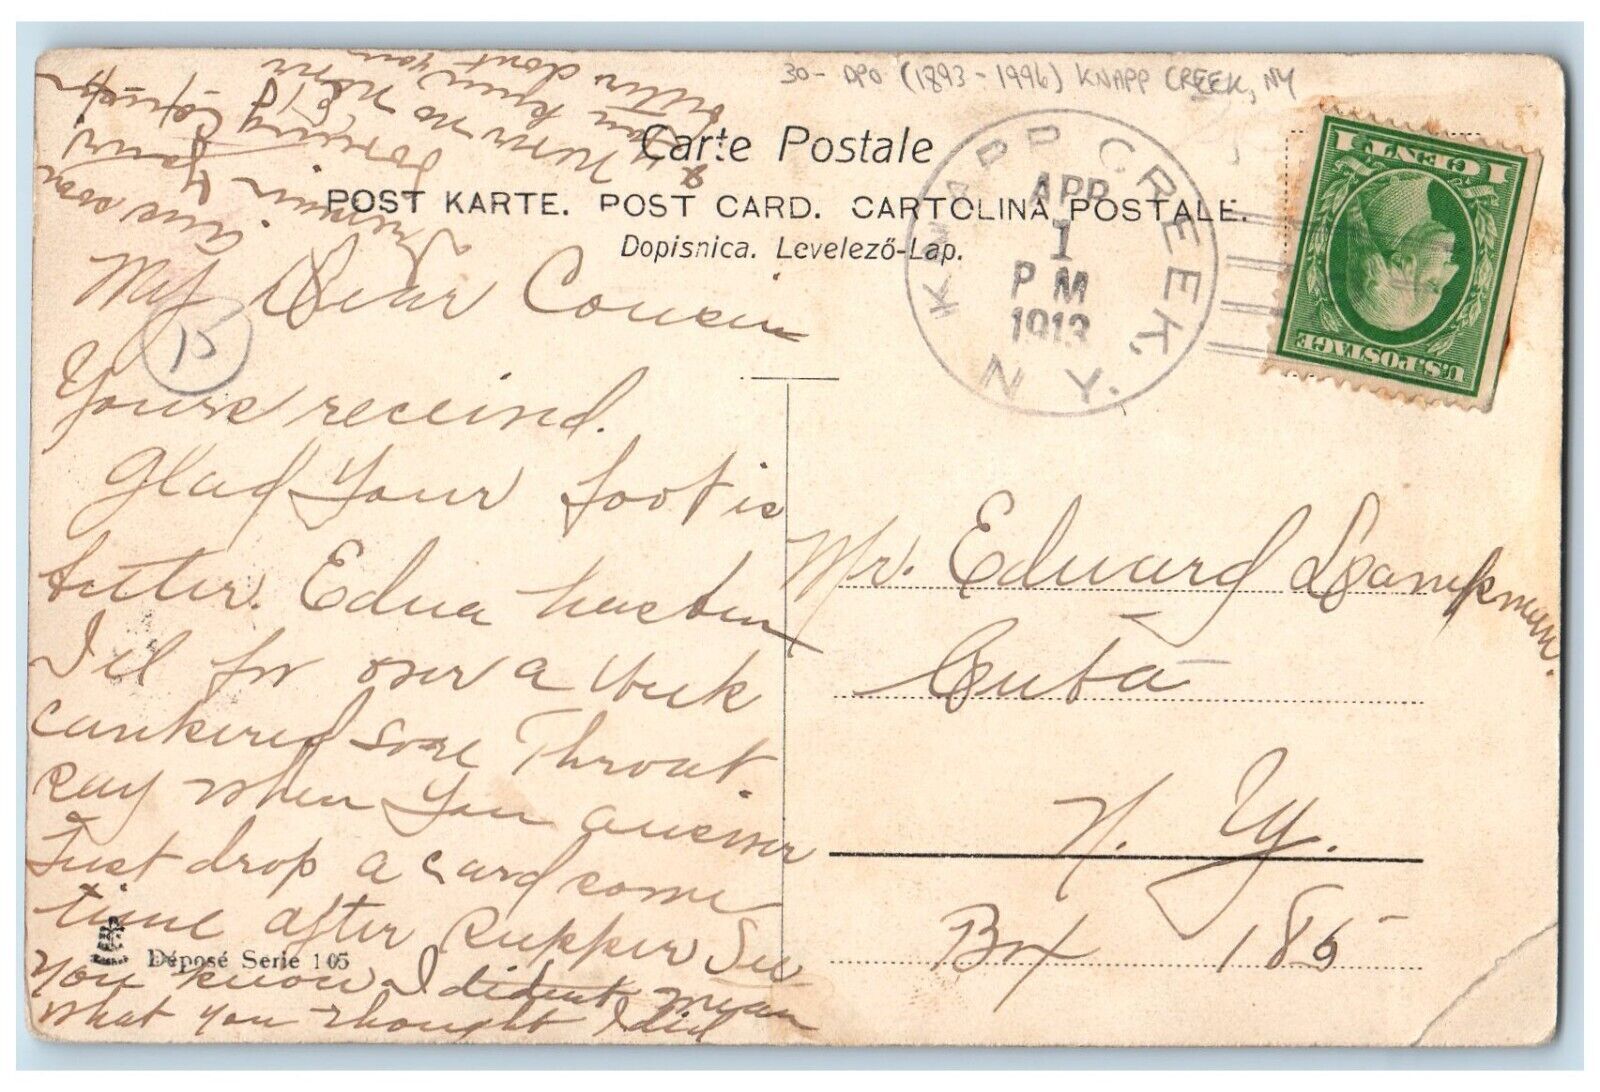 DPO (1893-1996) Knapp Creek NY Postcard Easter Greetings Pretty Girl Dog 1913